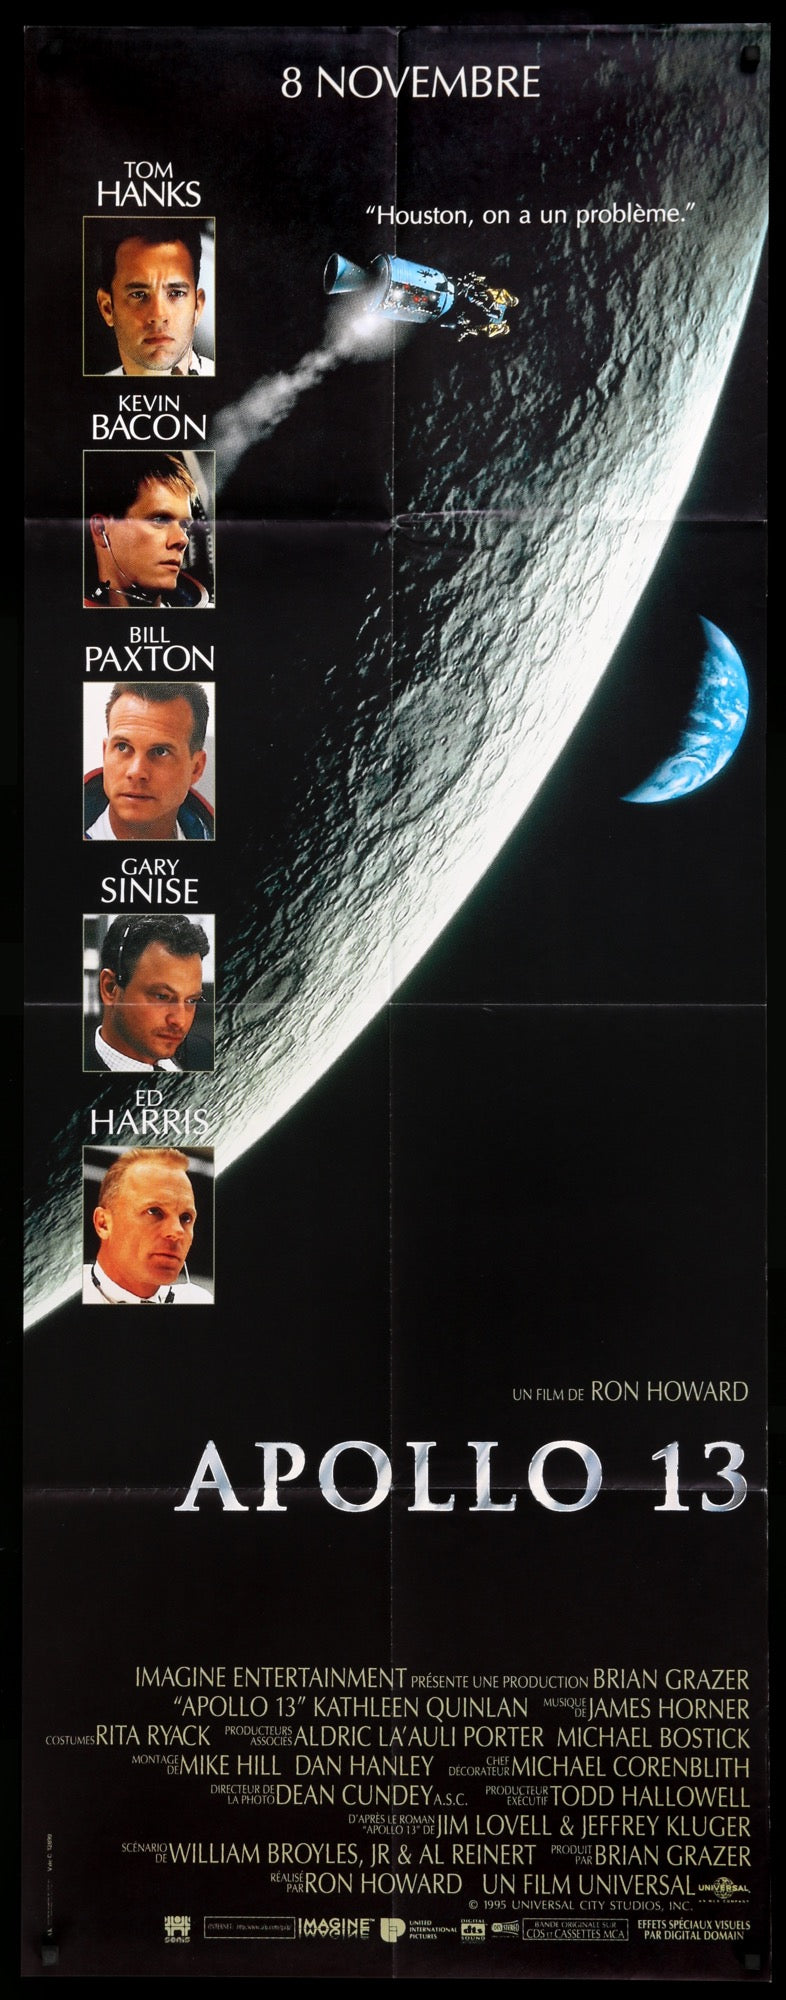 Apollo 13 (1995) Original French Door Panel Movie Poster